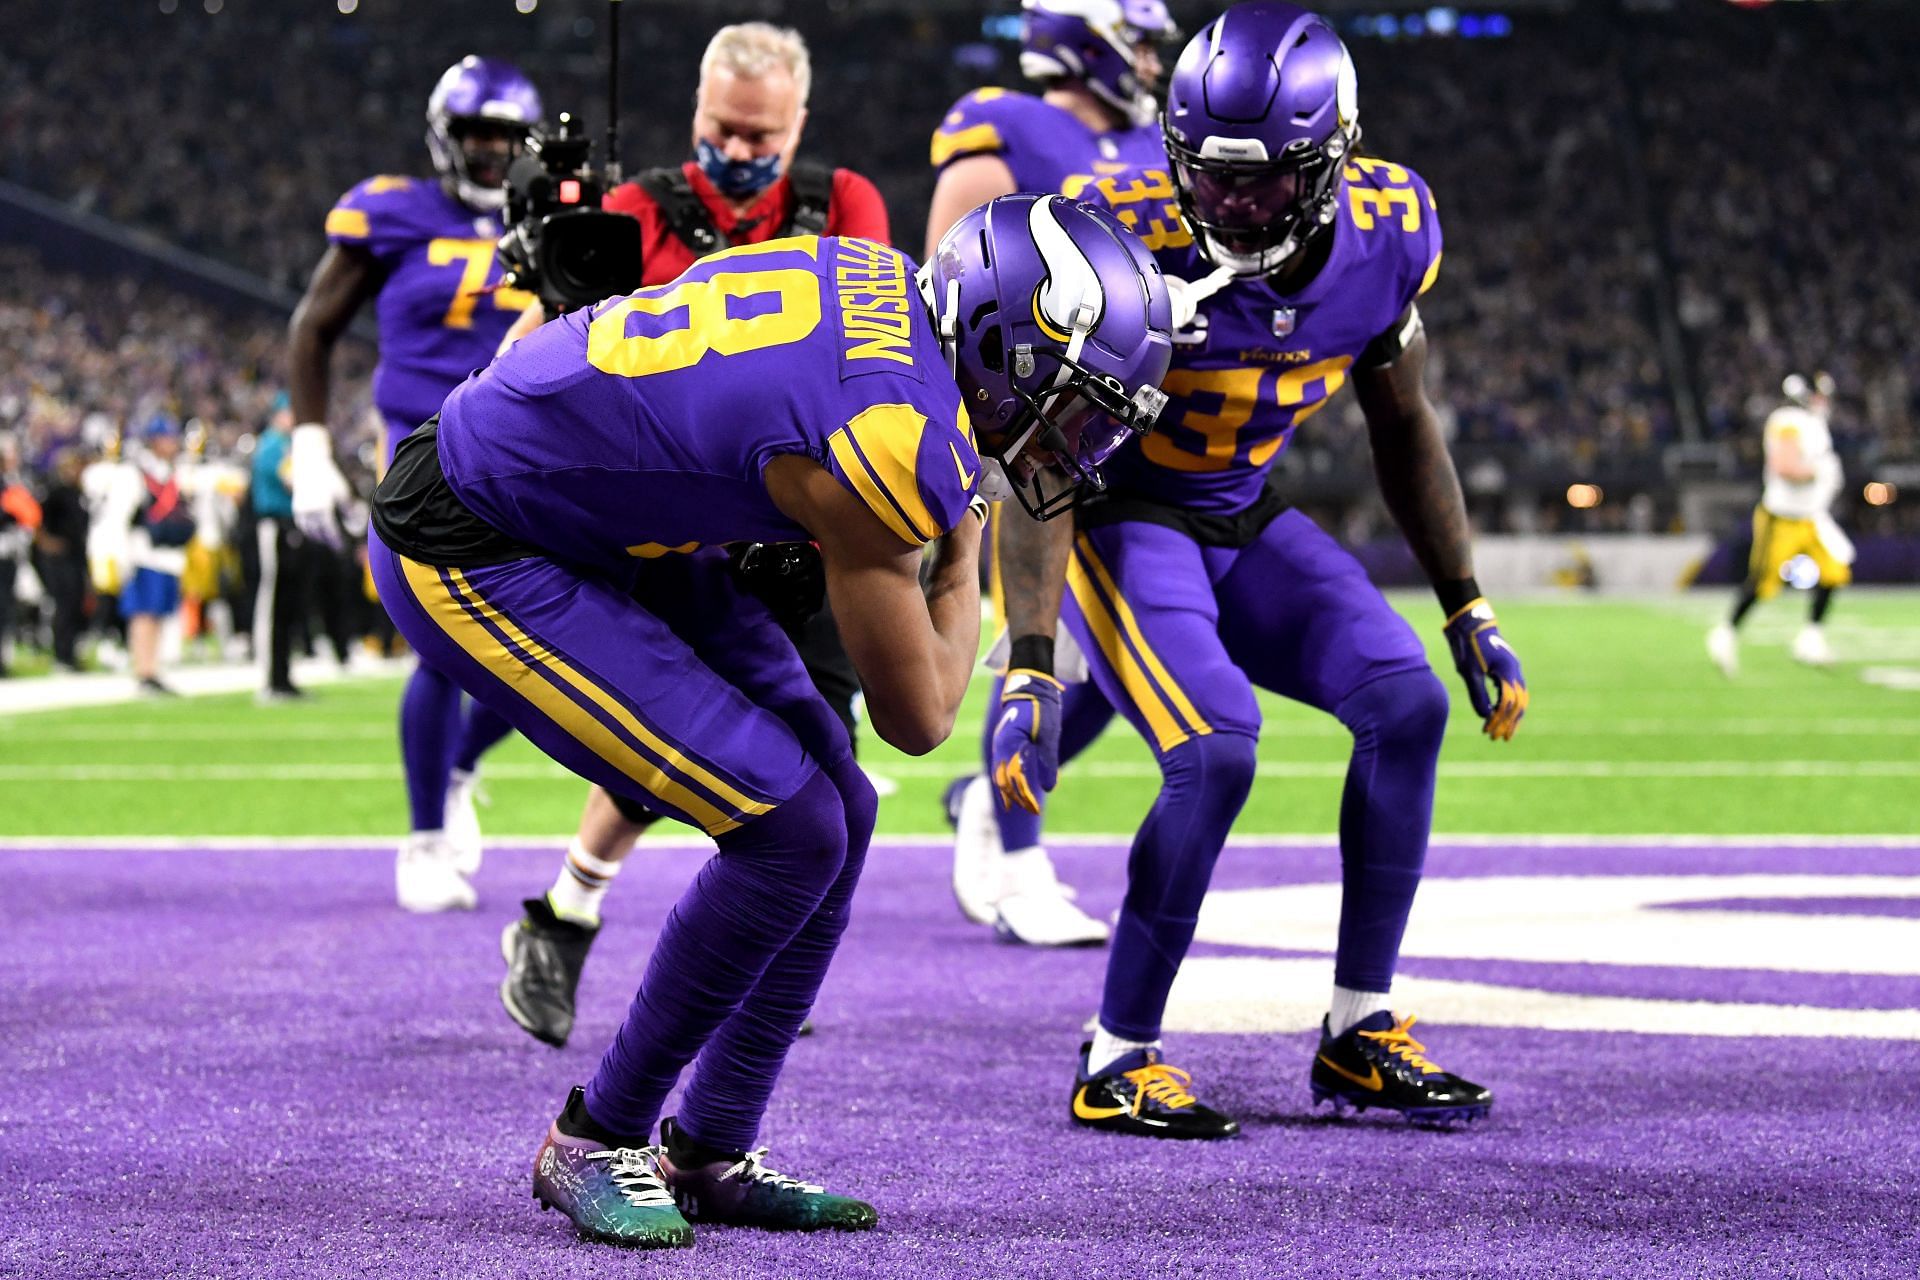 Minnesota Vikings wide receiver Justin Jefferson celebrating a touchdown catch